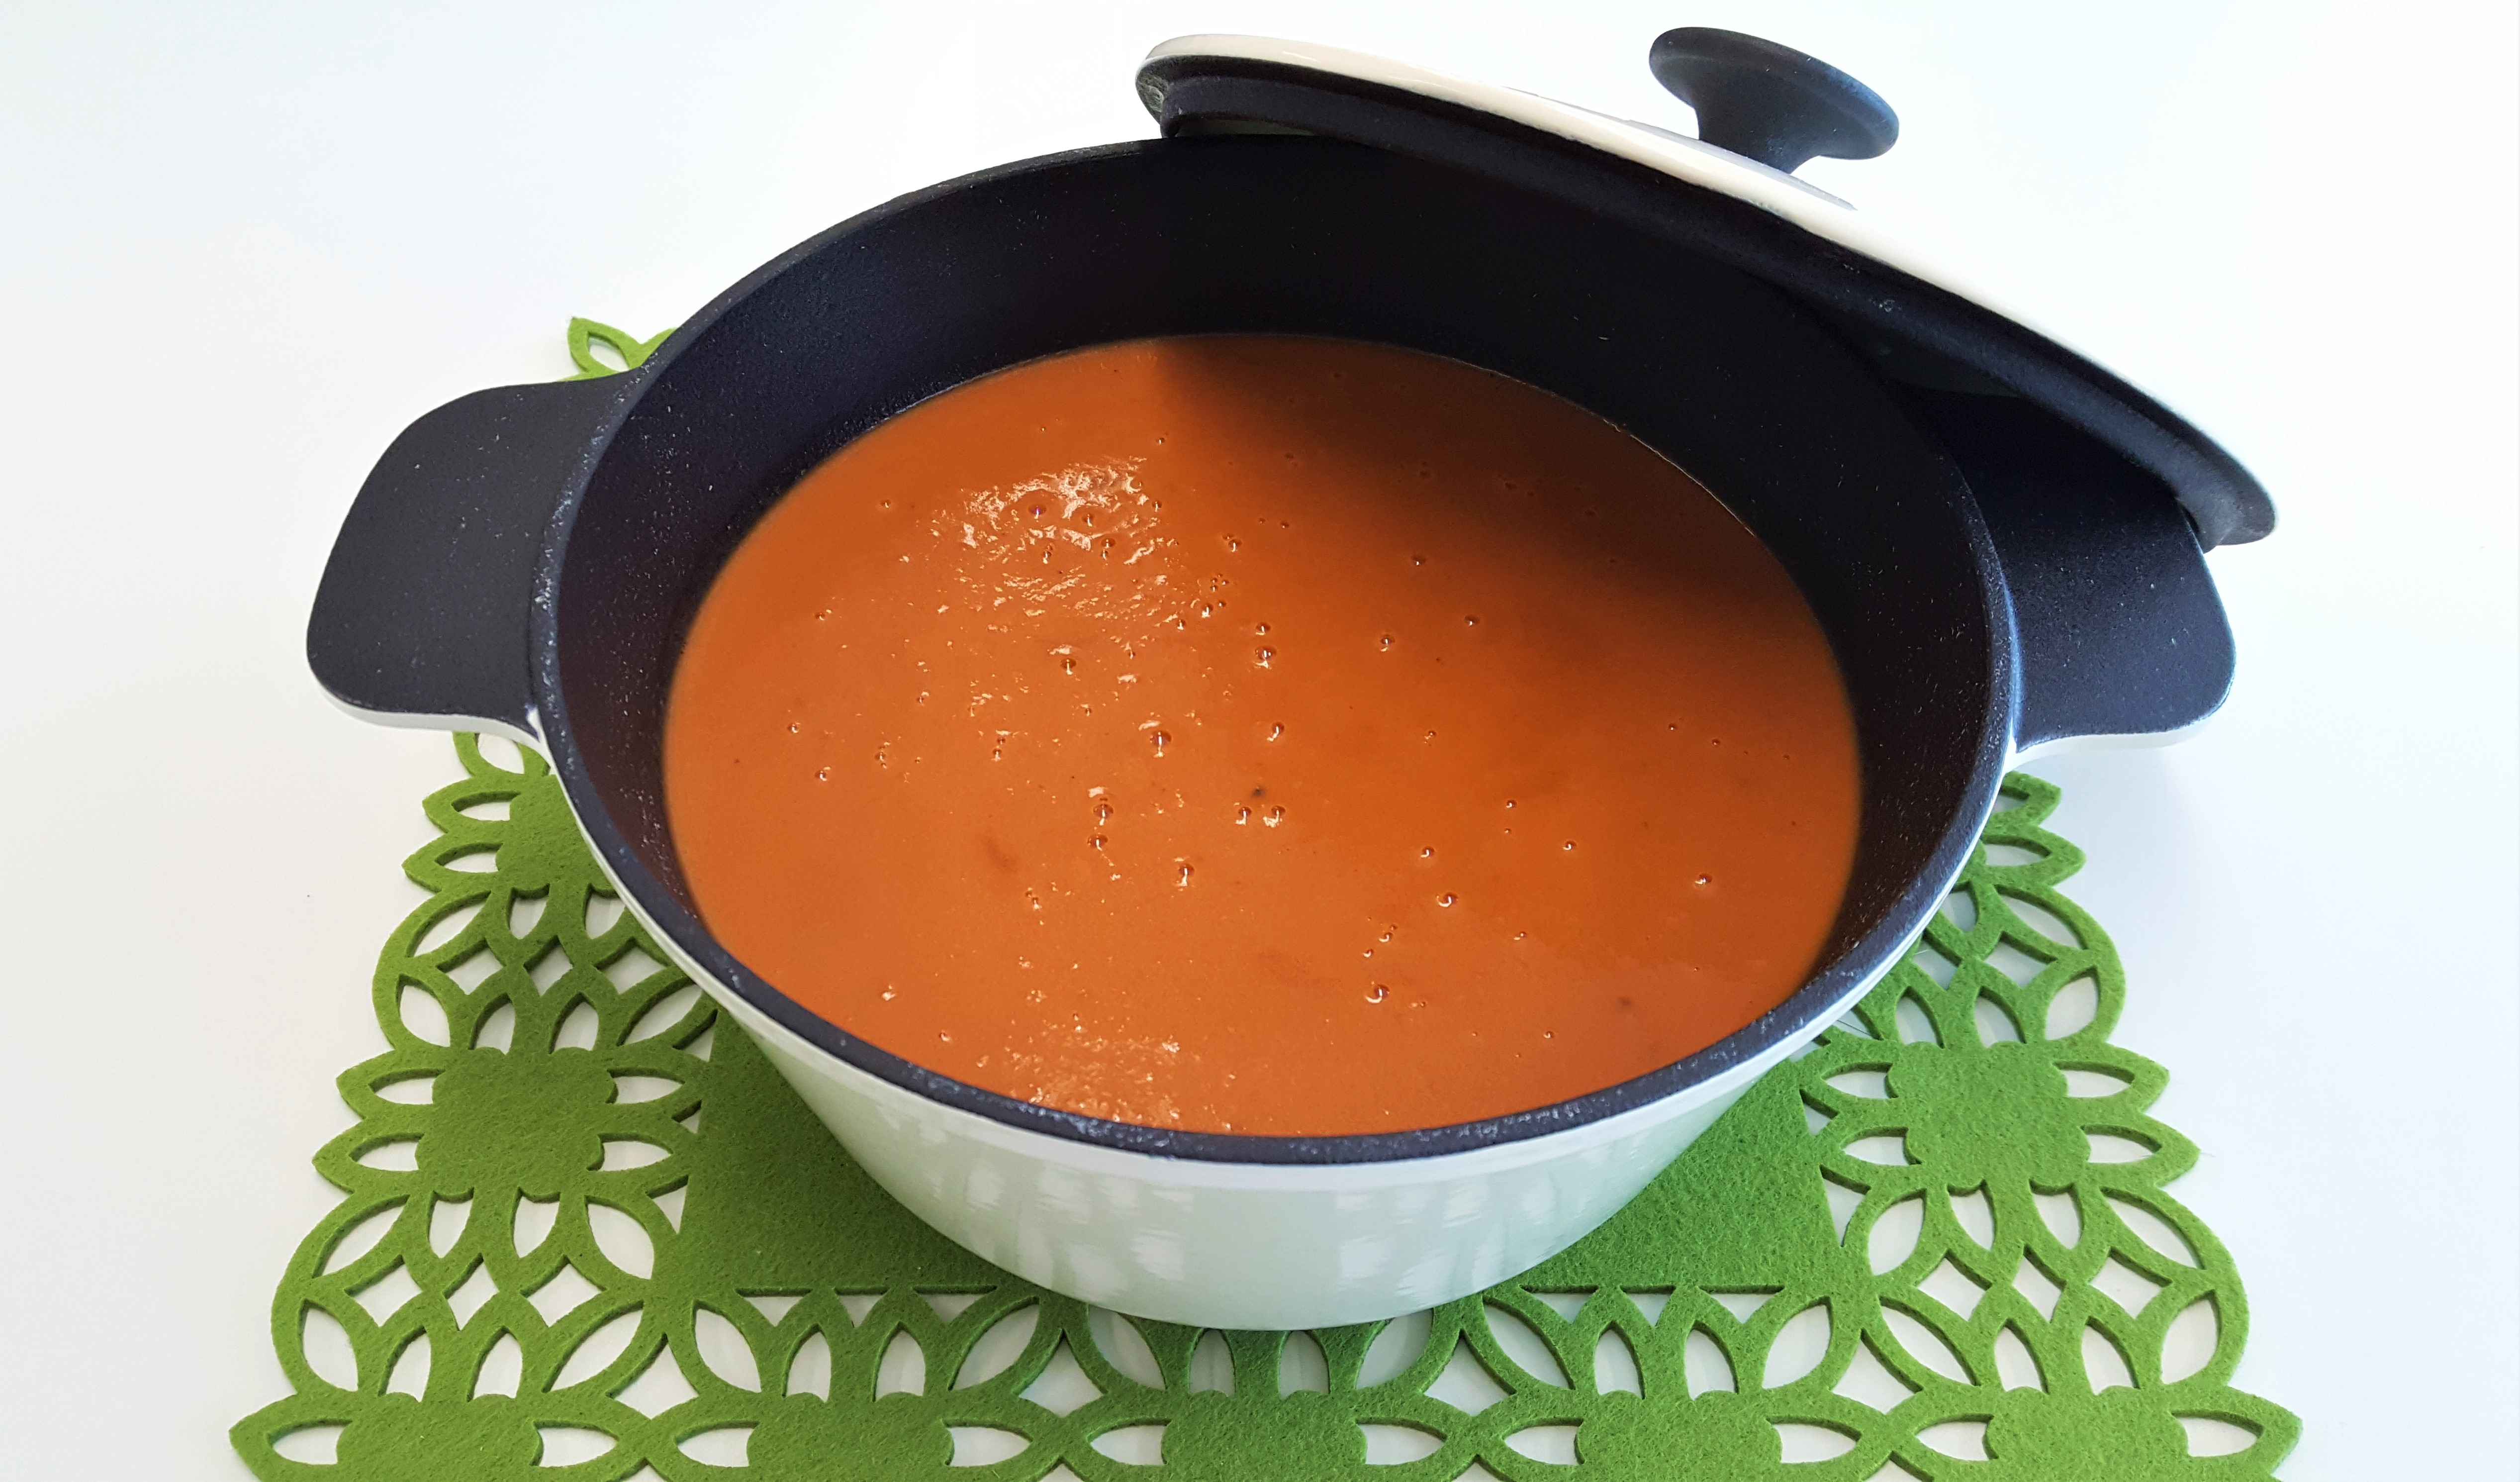 Kermainen tomaattikeitto 2 kg L,G,P  (6)